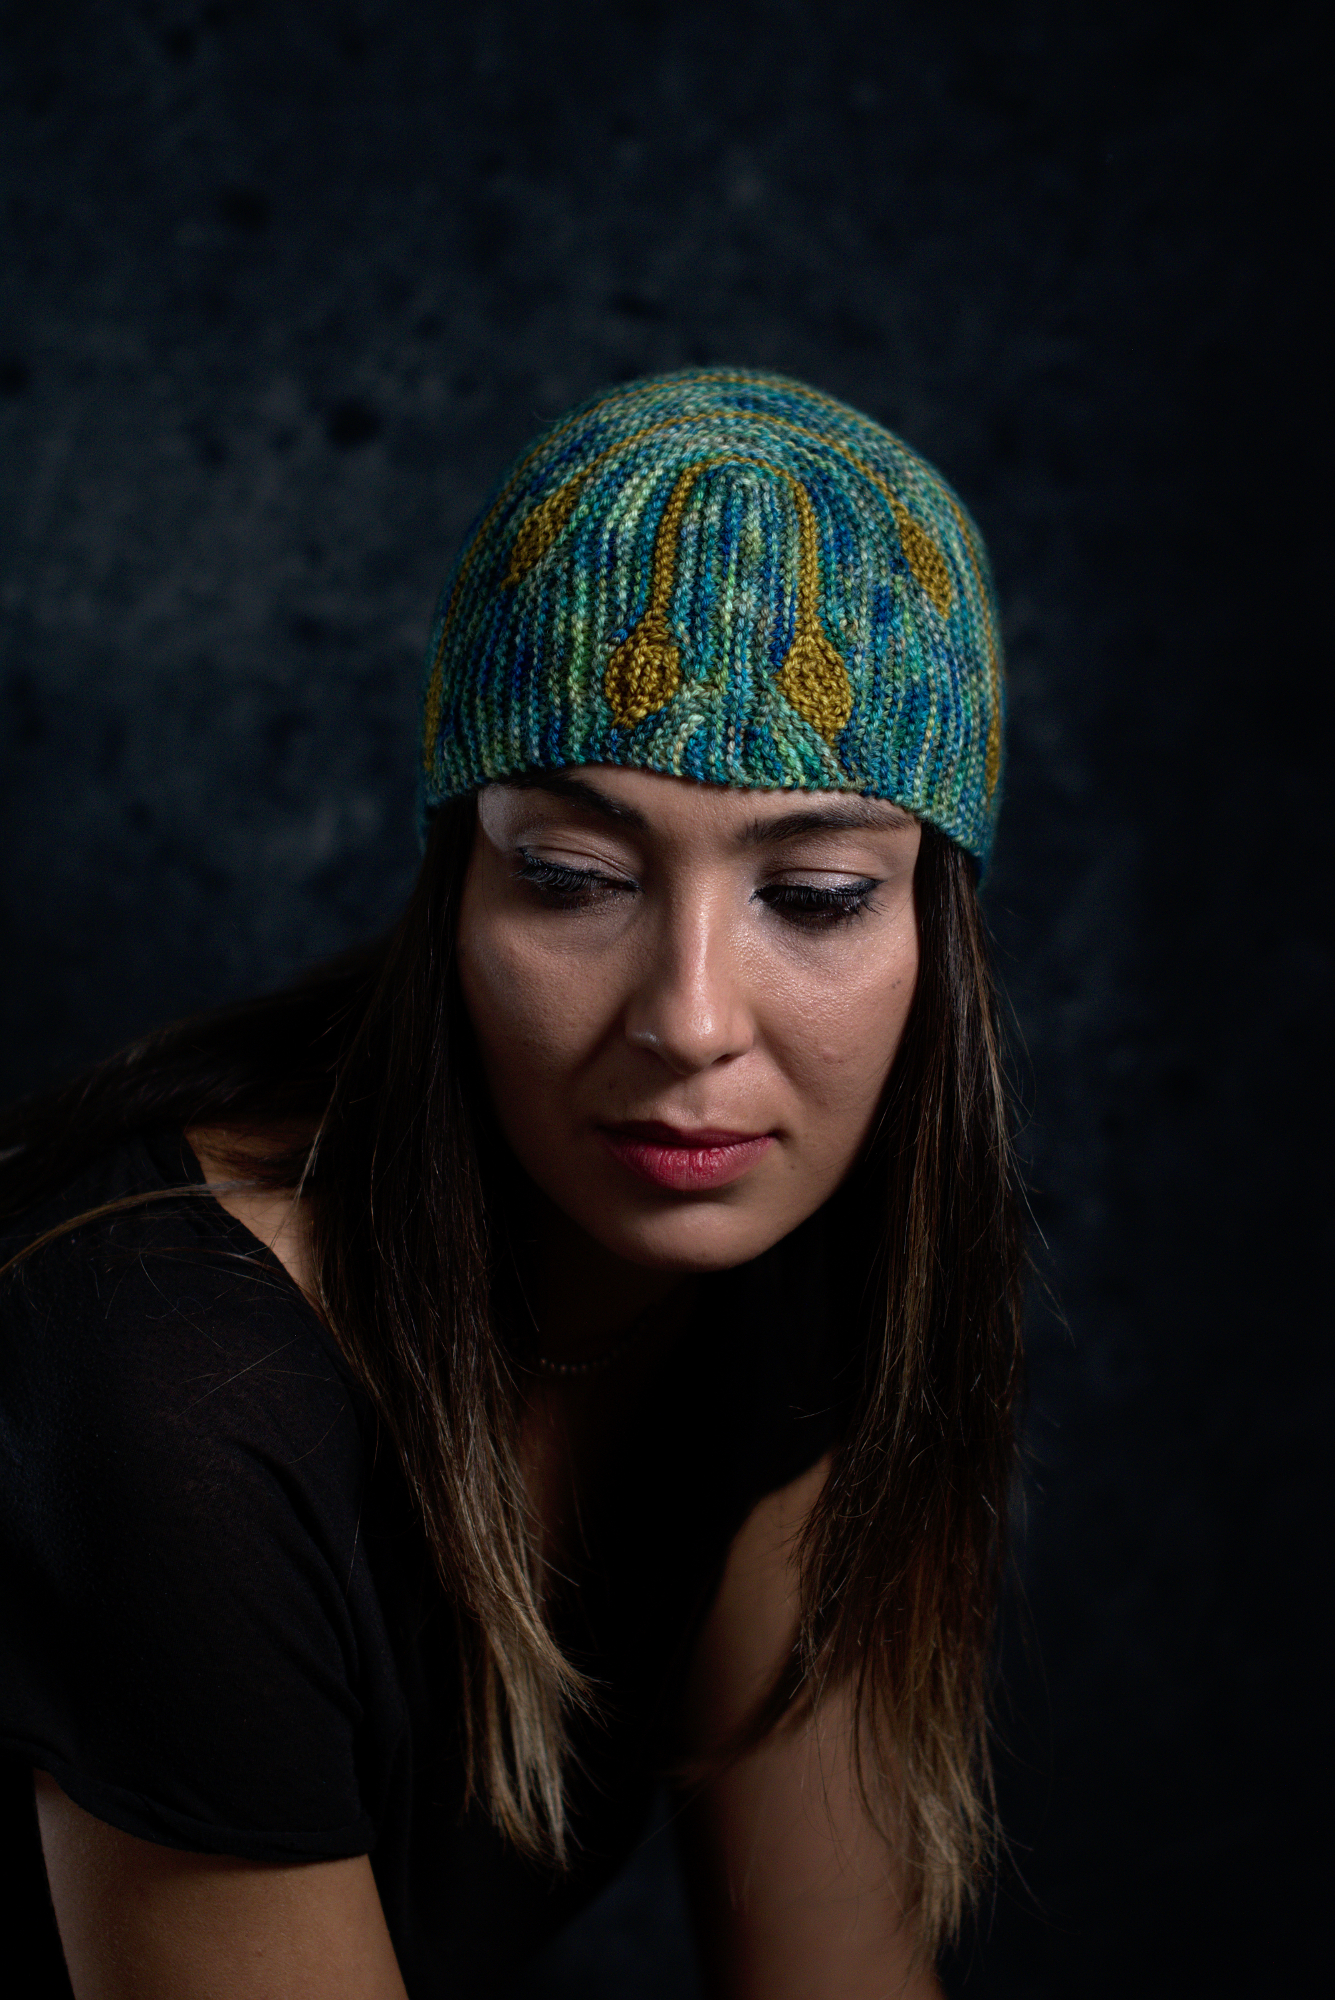 Bilateral sideways knit short row colourwork hat knitting pattern